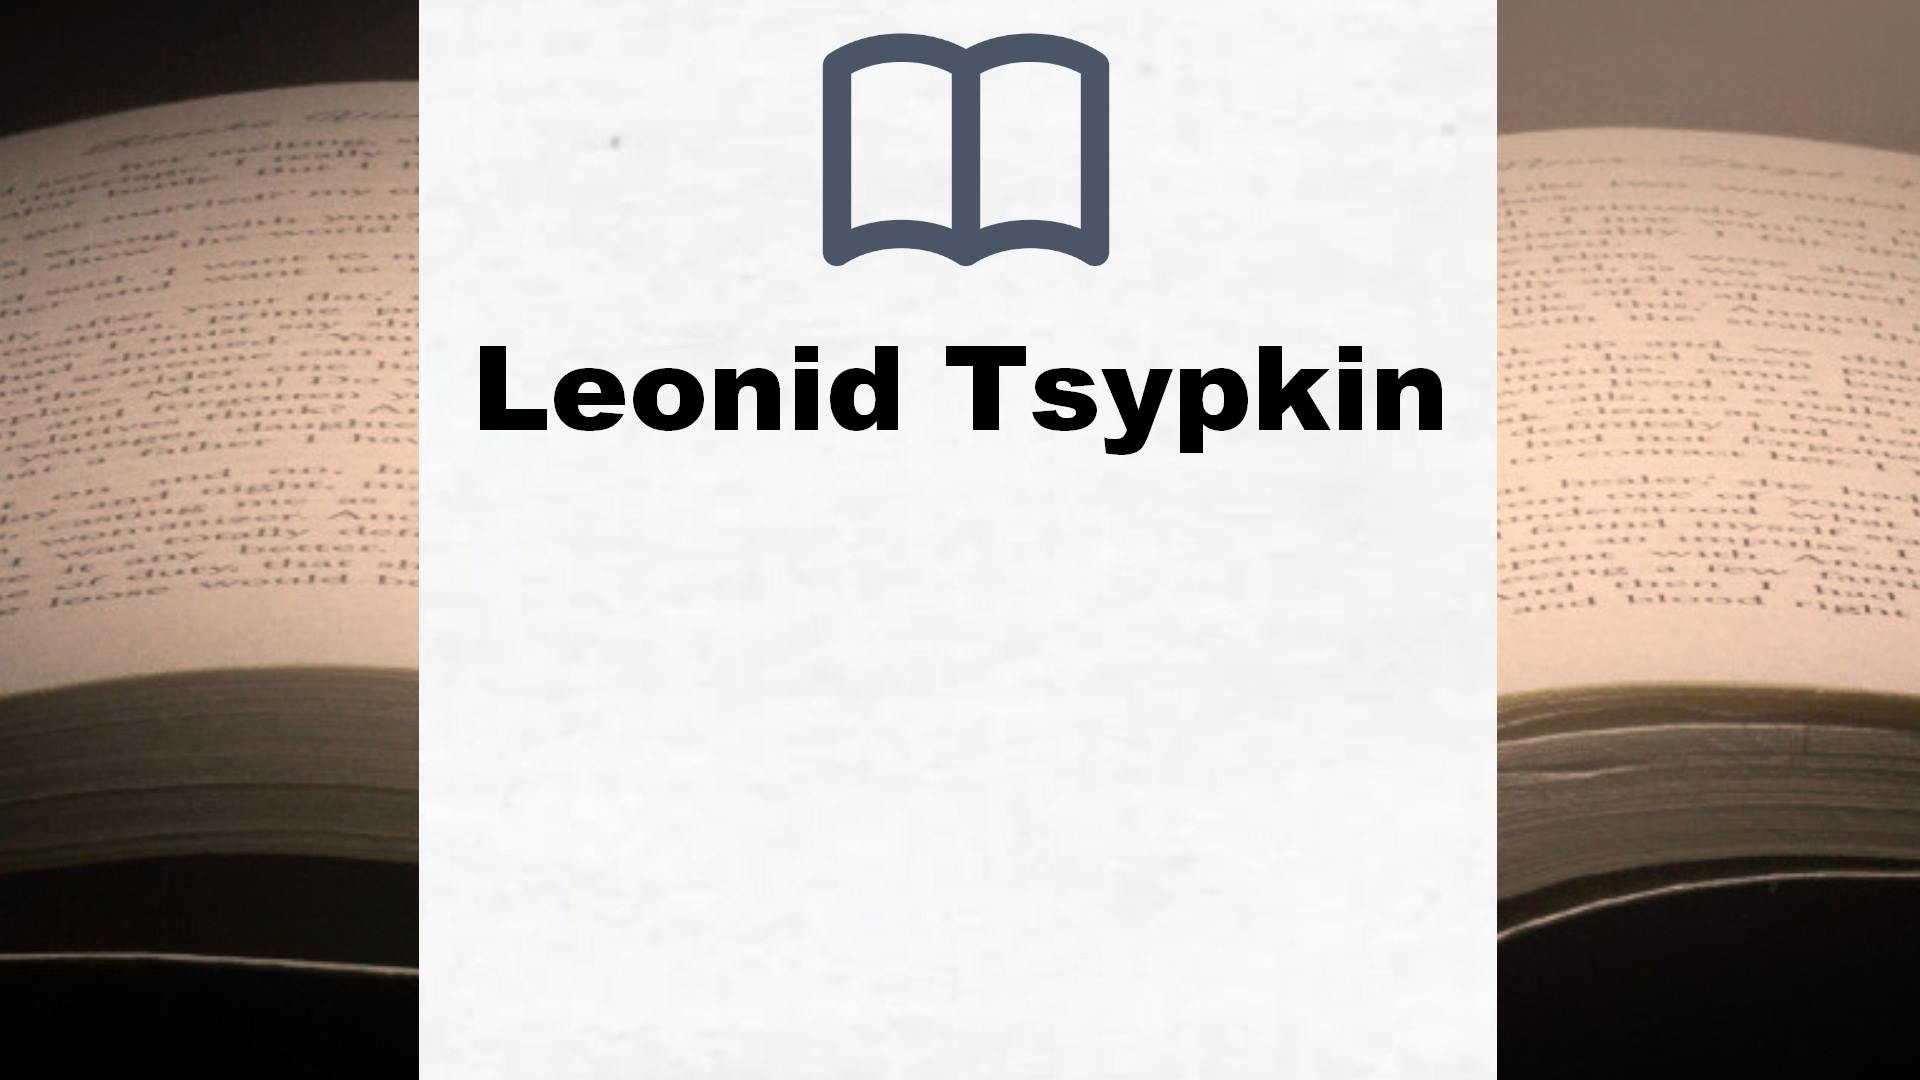 Libros Leonid Tsypkin